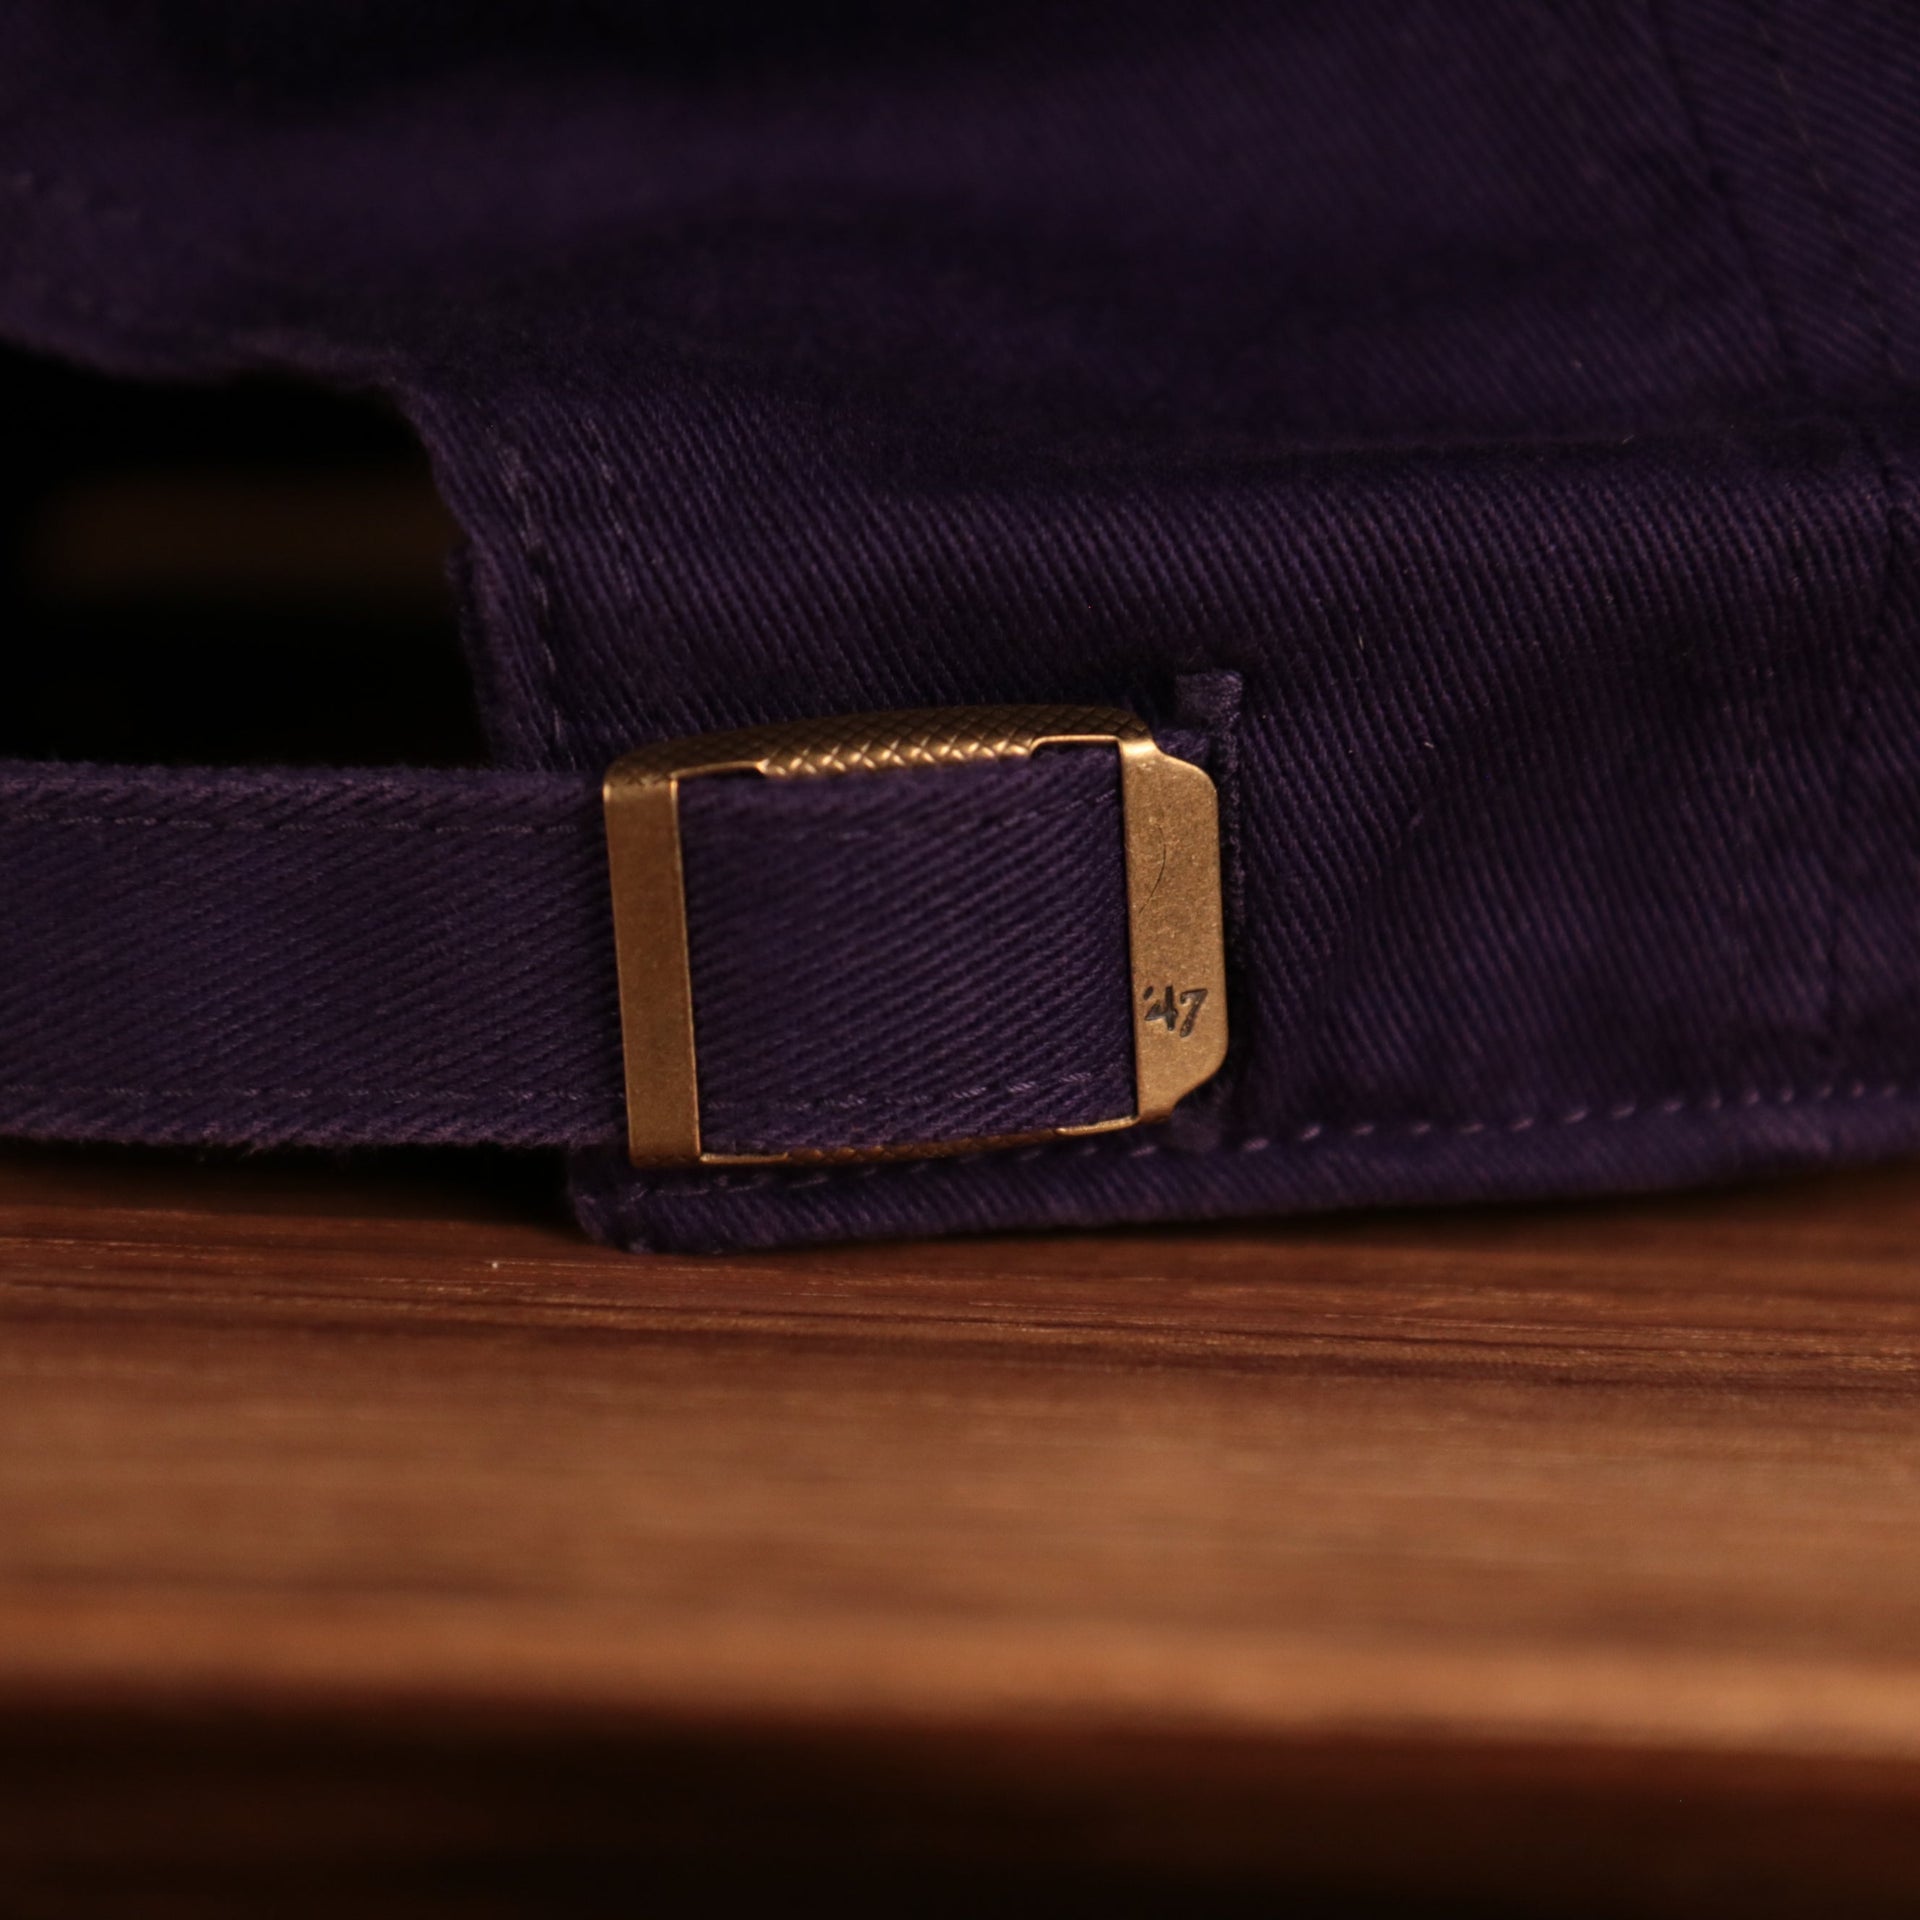 adjustable strap on the Los Angeles Lakers Purple Adjustable Dad Hat